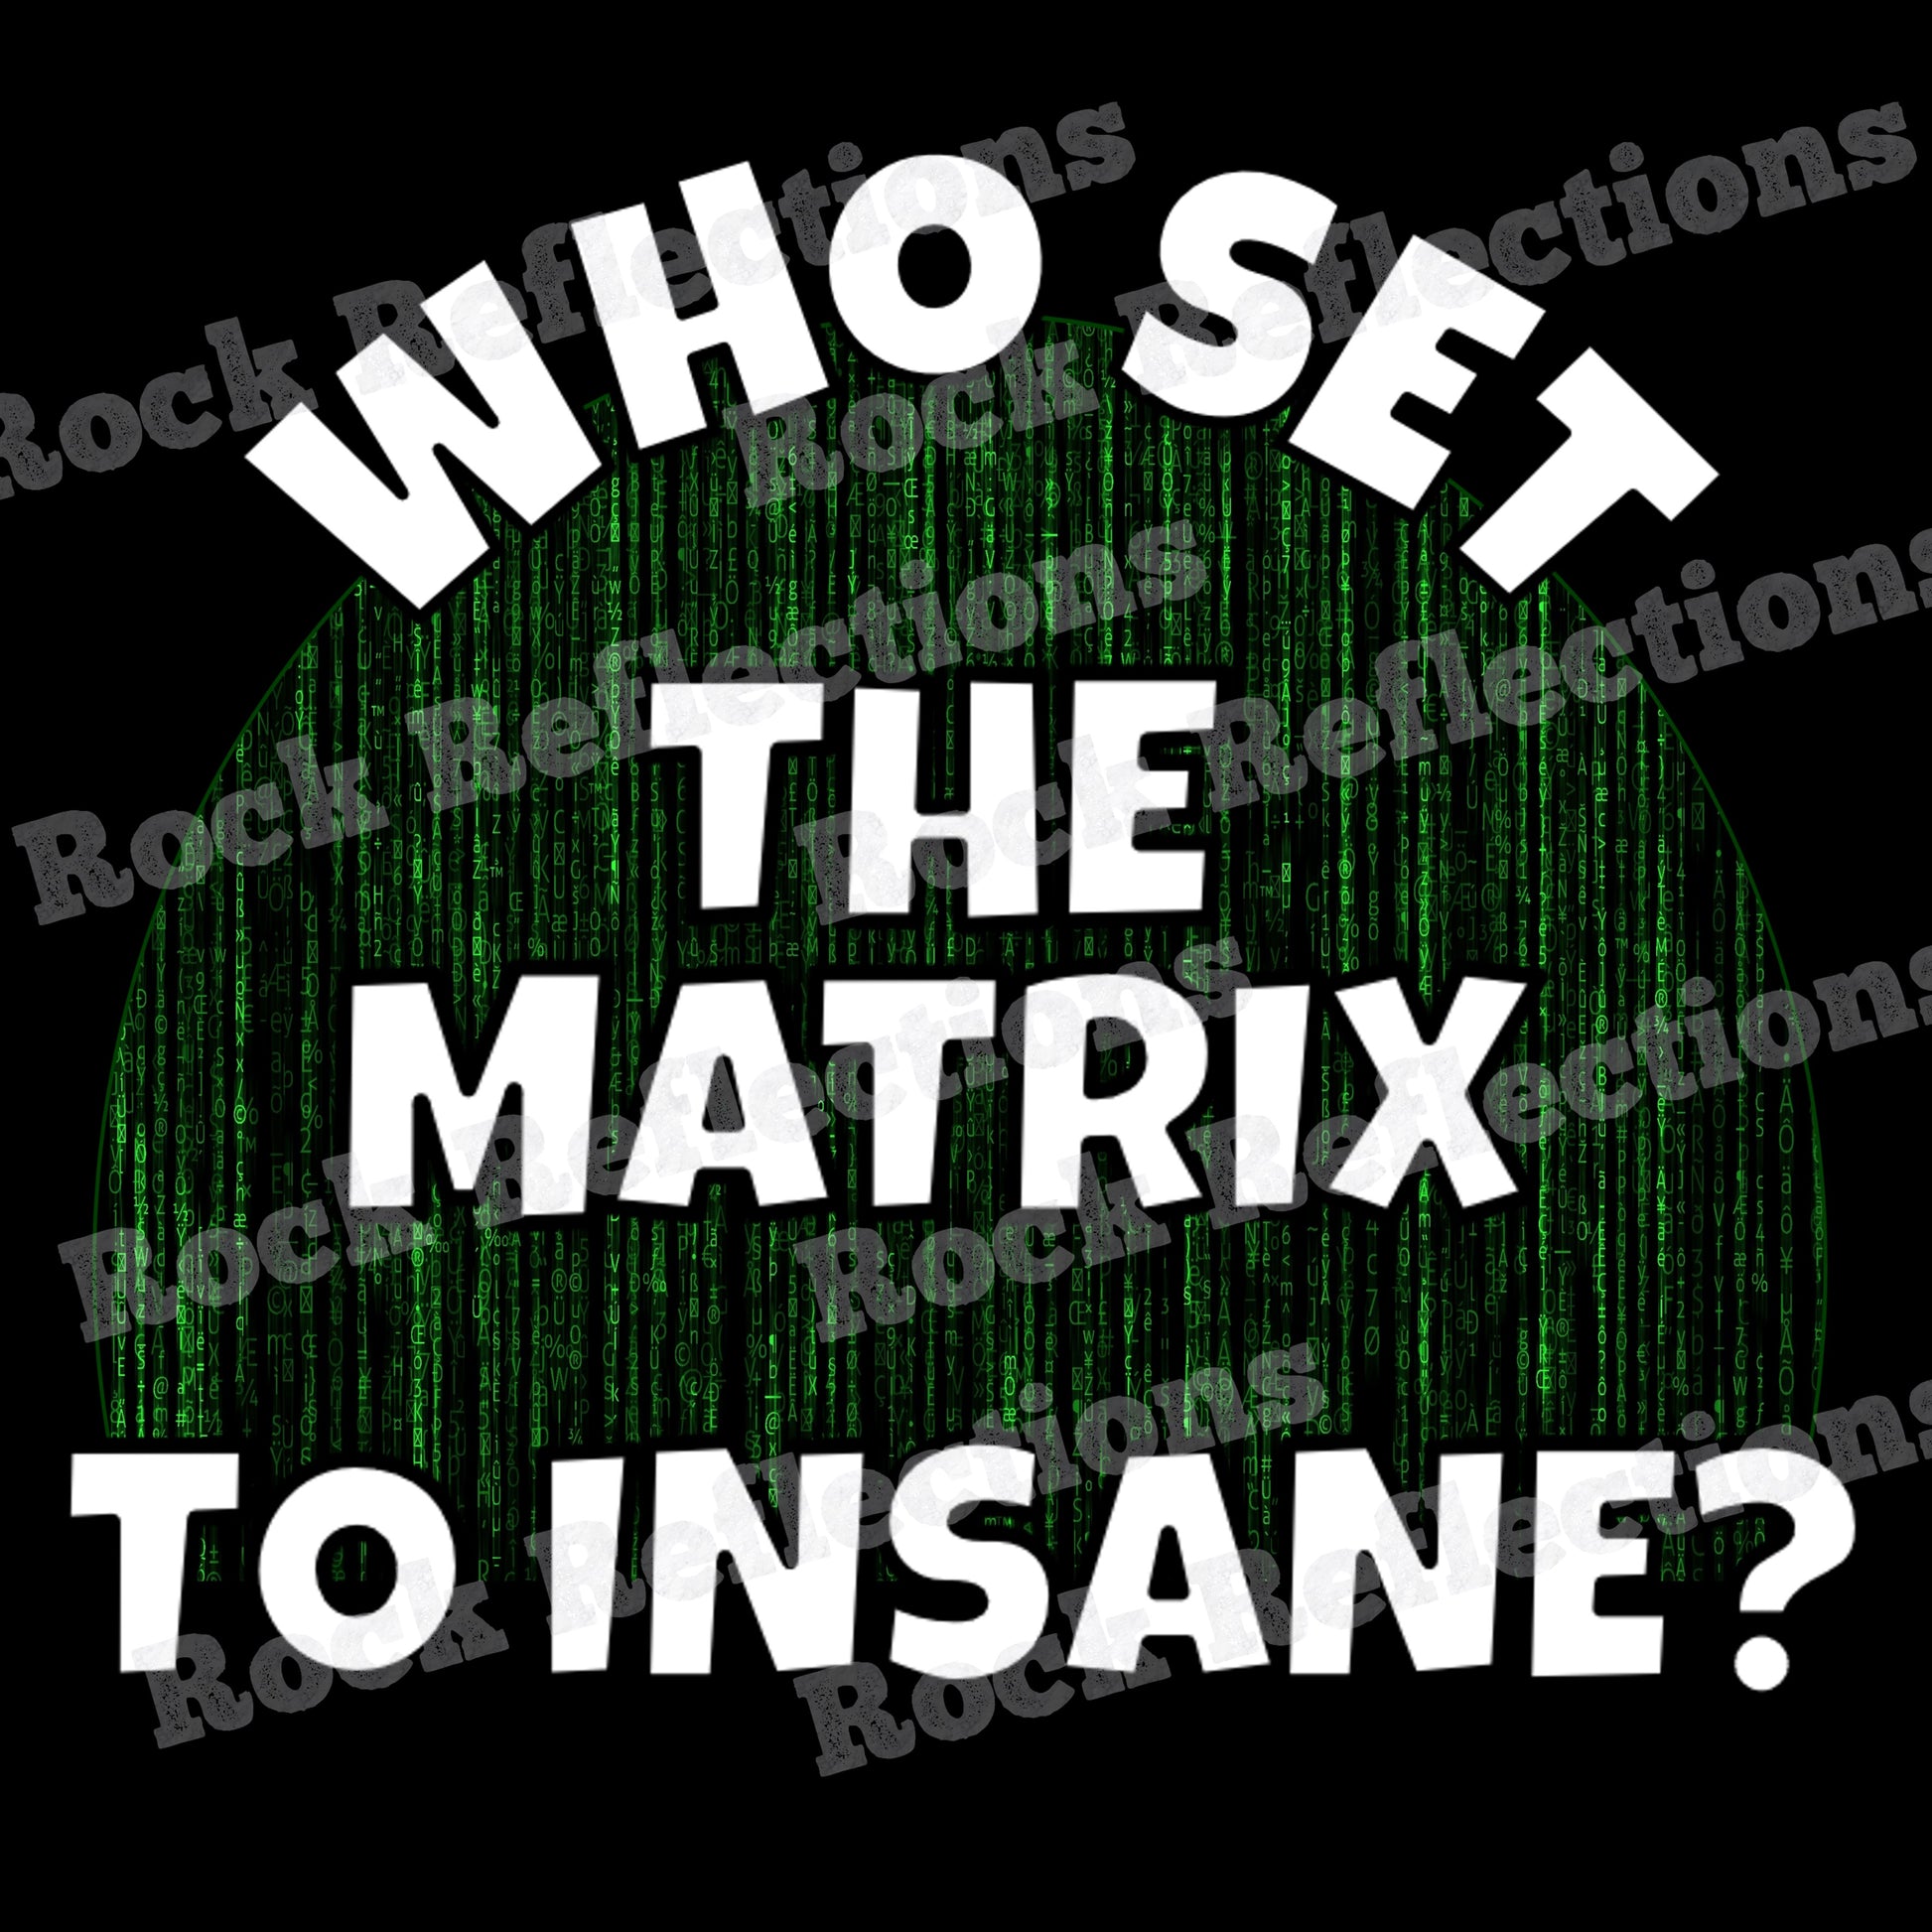 Matrix Set To Insane Black Mug CustomCat